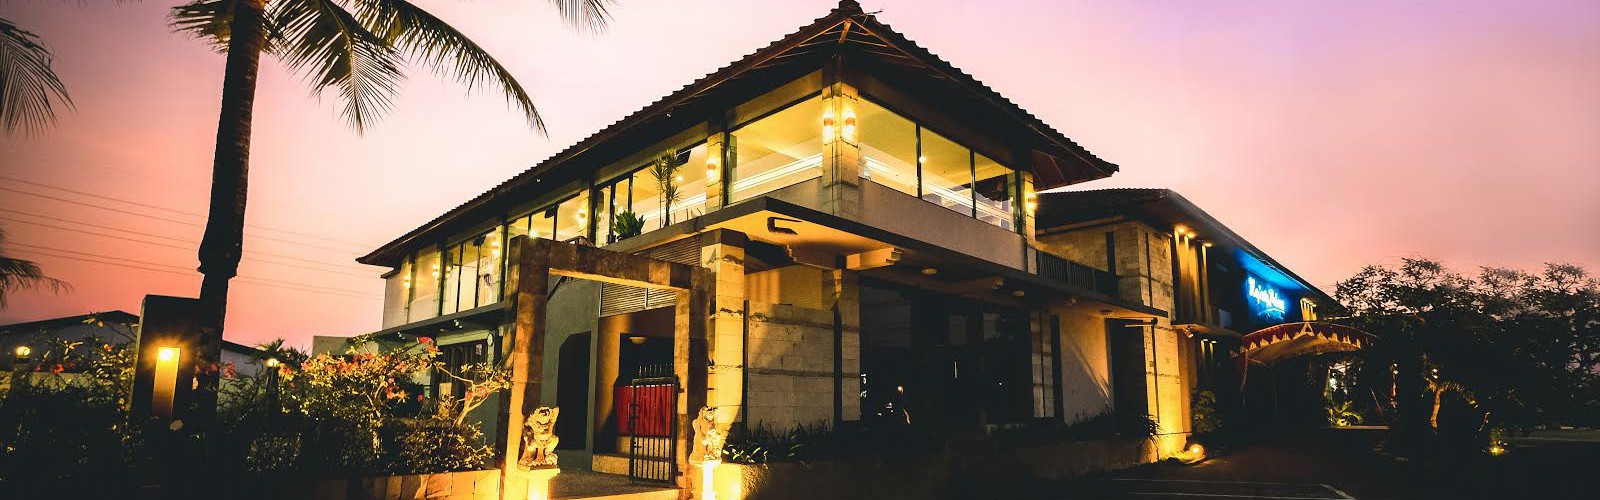 Hotel Griptha Kudus – The Best Hotel in Town